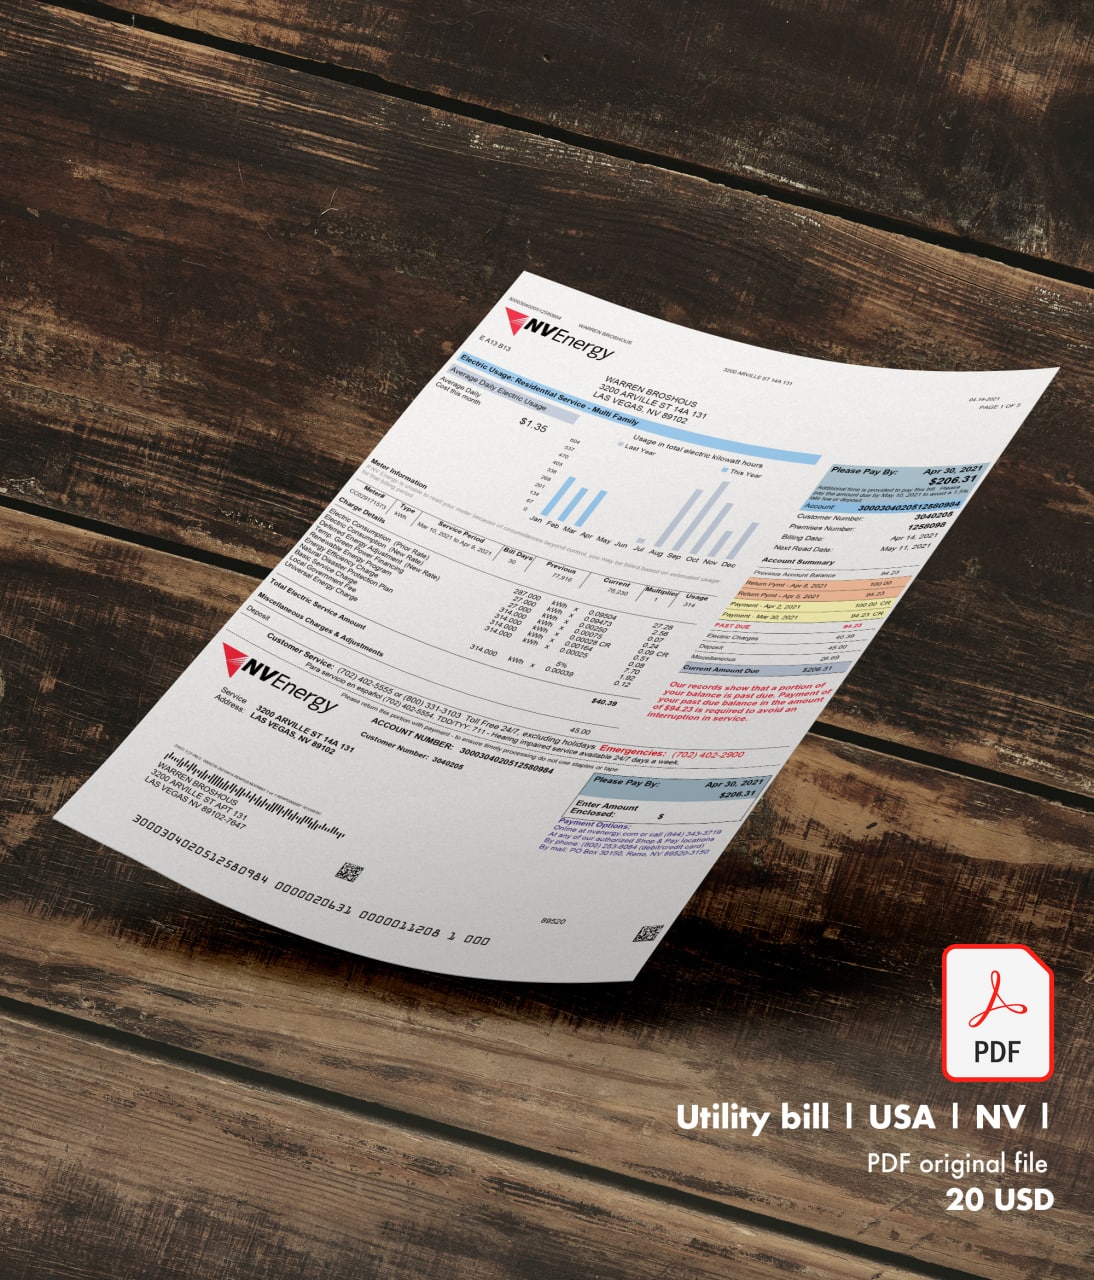 Utility bill | NVenergy | USA | NV1